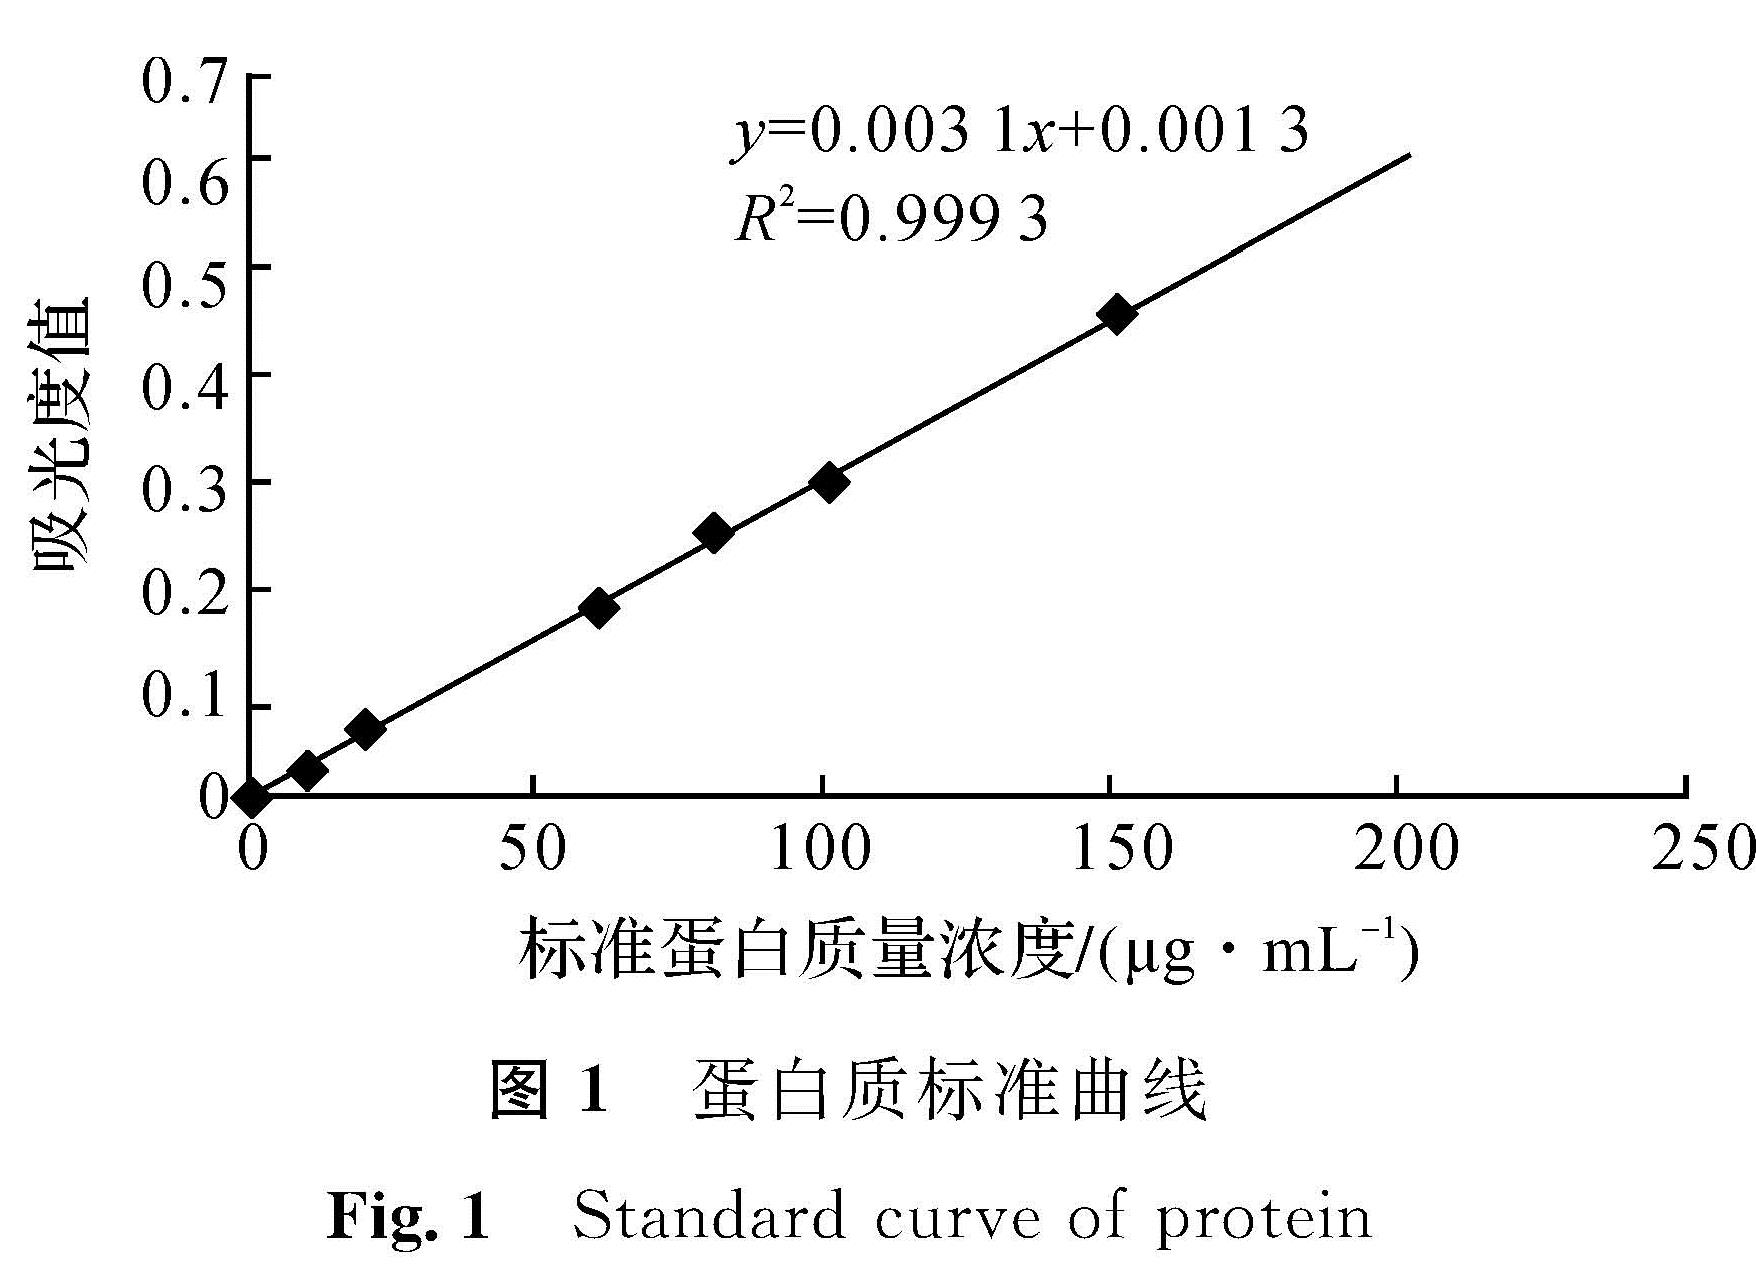 图1 蛋白质标准曲线<br/>Fig.1 Standard curve of protein